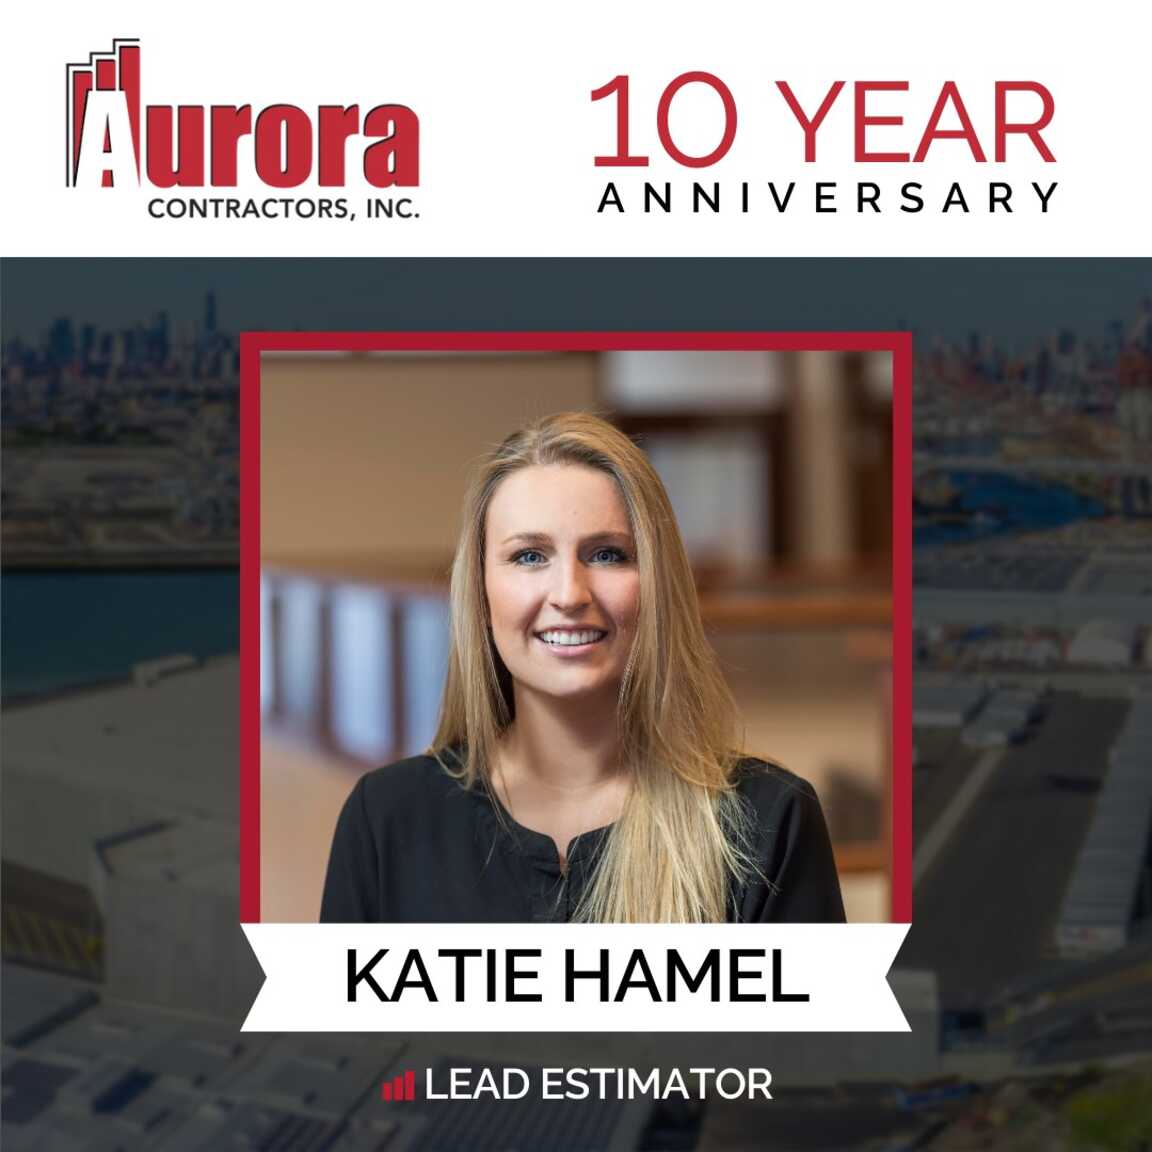 Katie Hamel Celebrating 10 Years with Aurora!